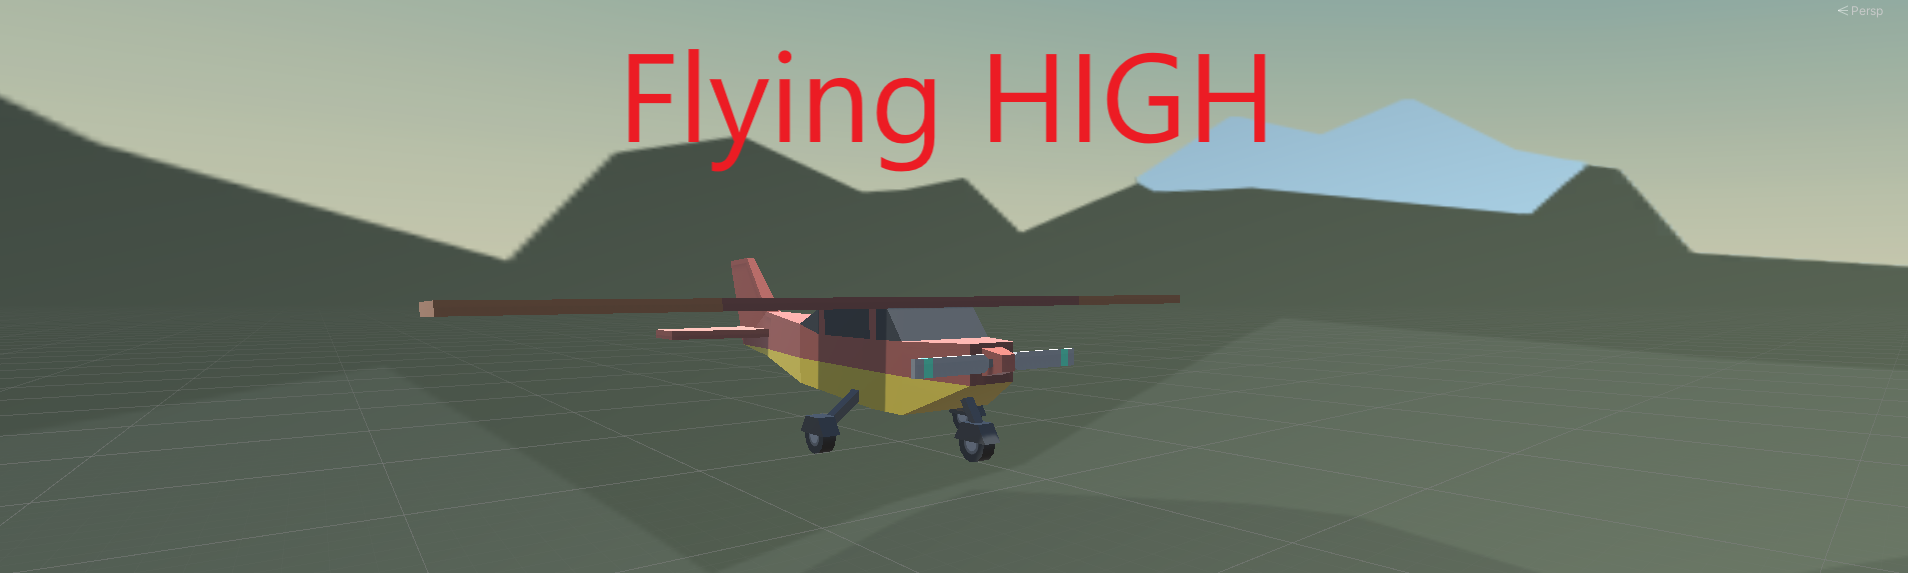 Flying HIGH